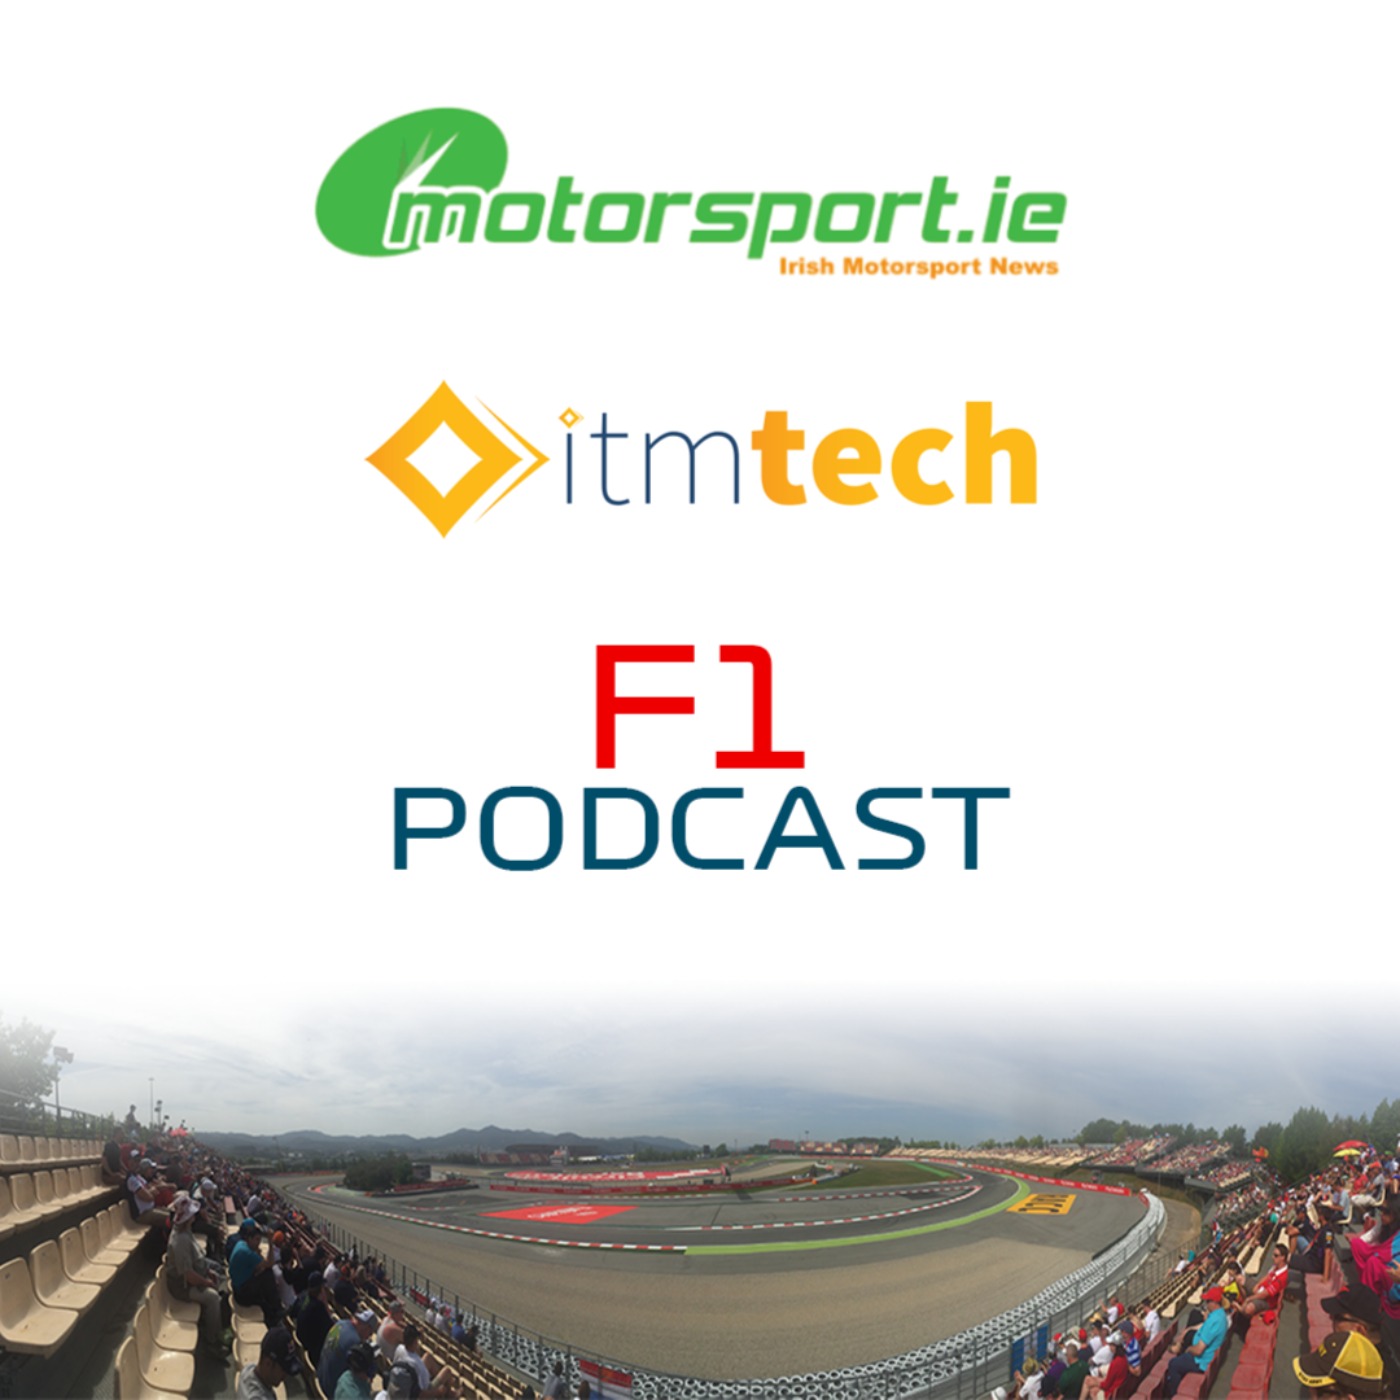 The Formula 1 Podcast